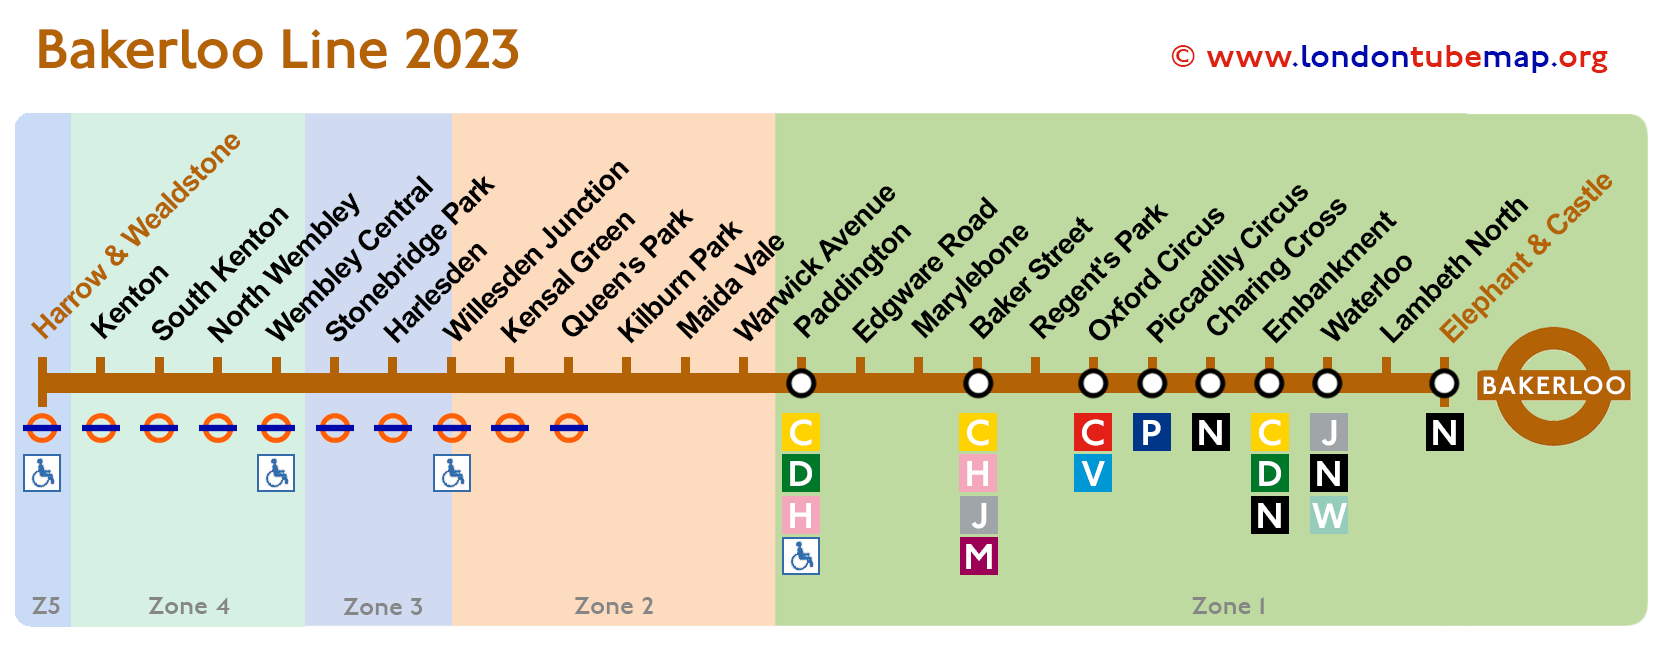 Bakerloo line map 2023